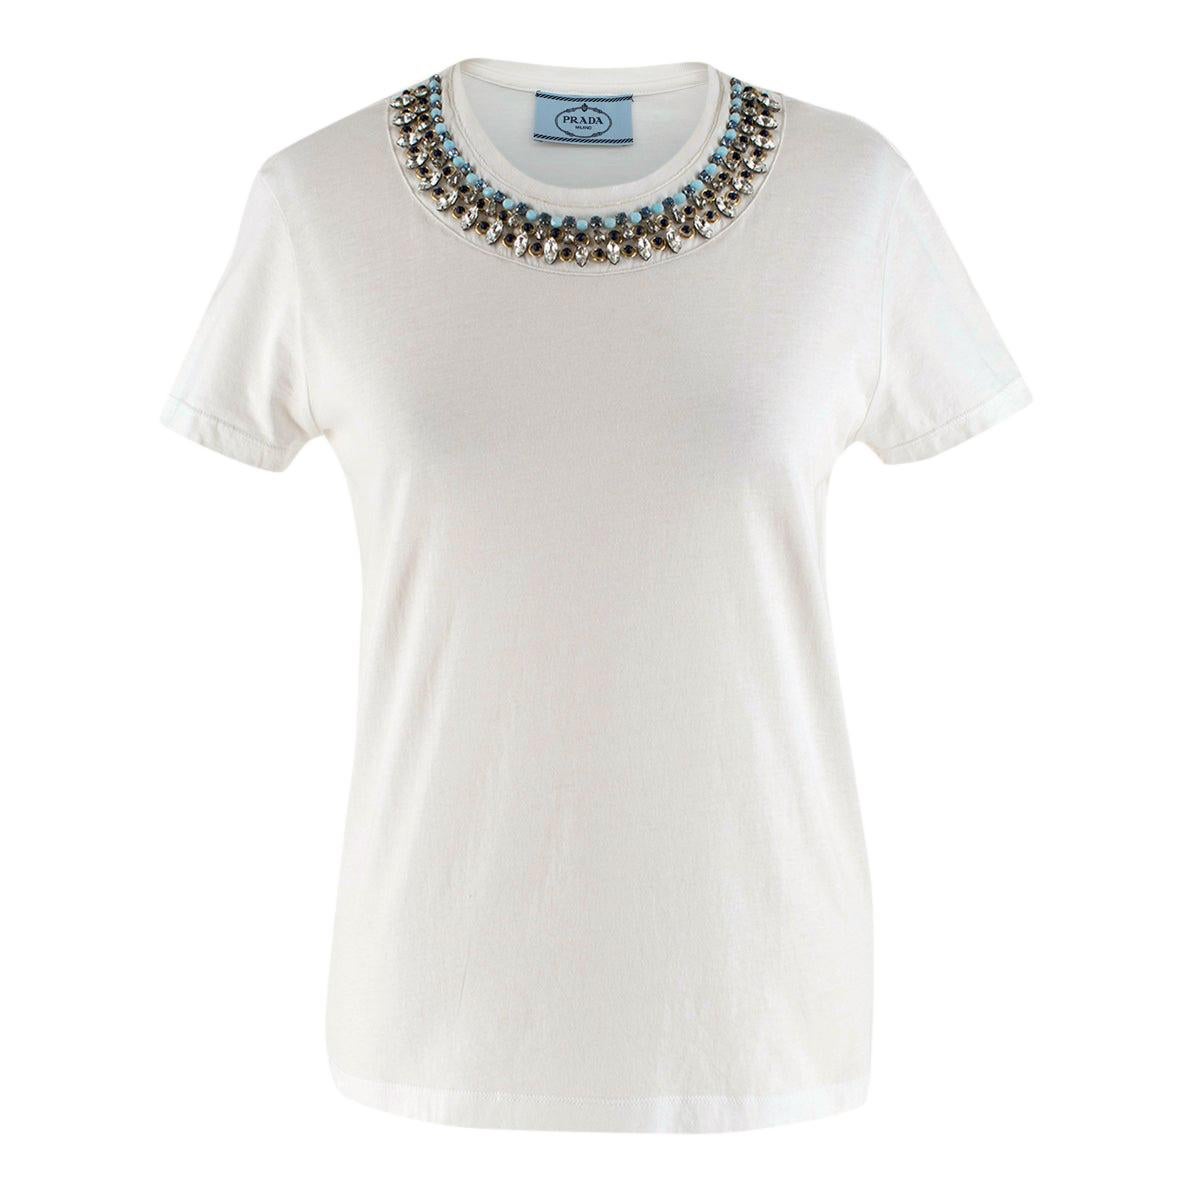 Prada White Cotton Embellished T-shirt estimated SIZE XS-S at 